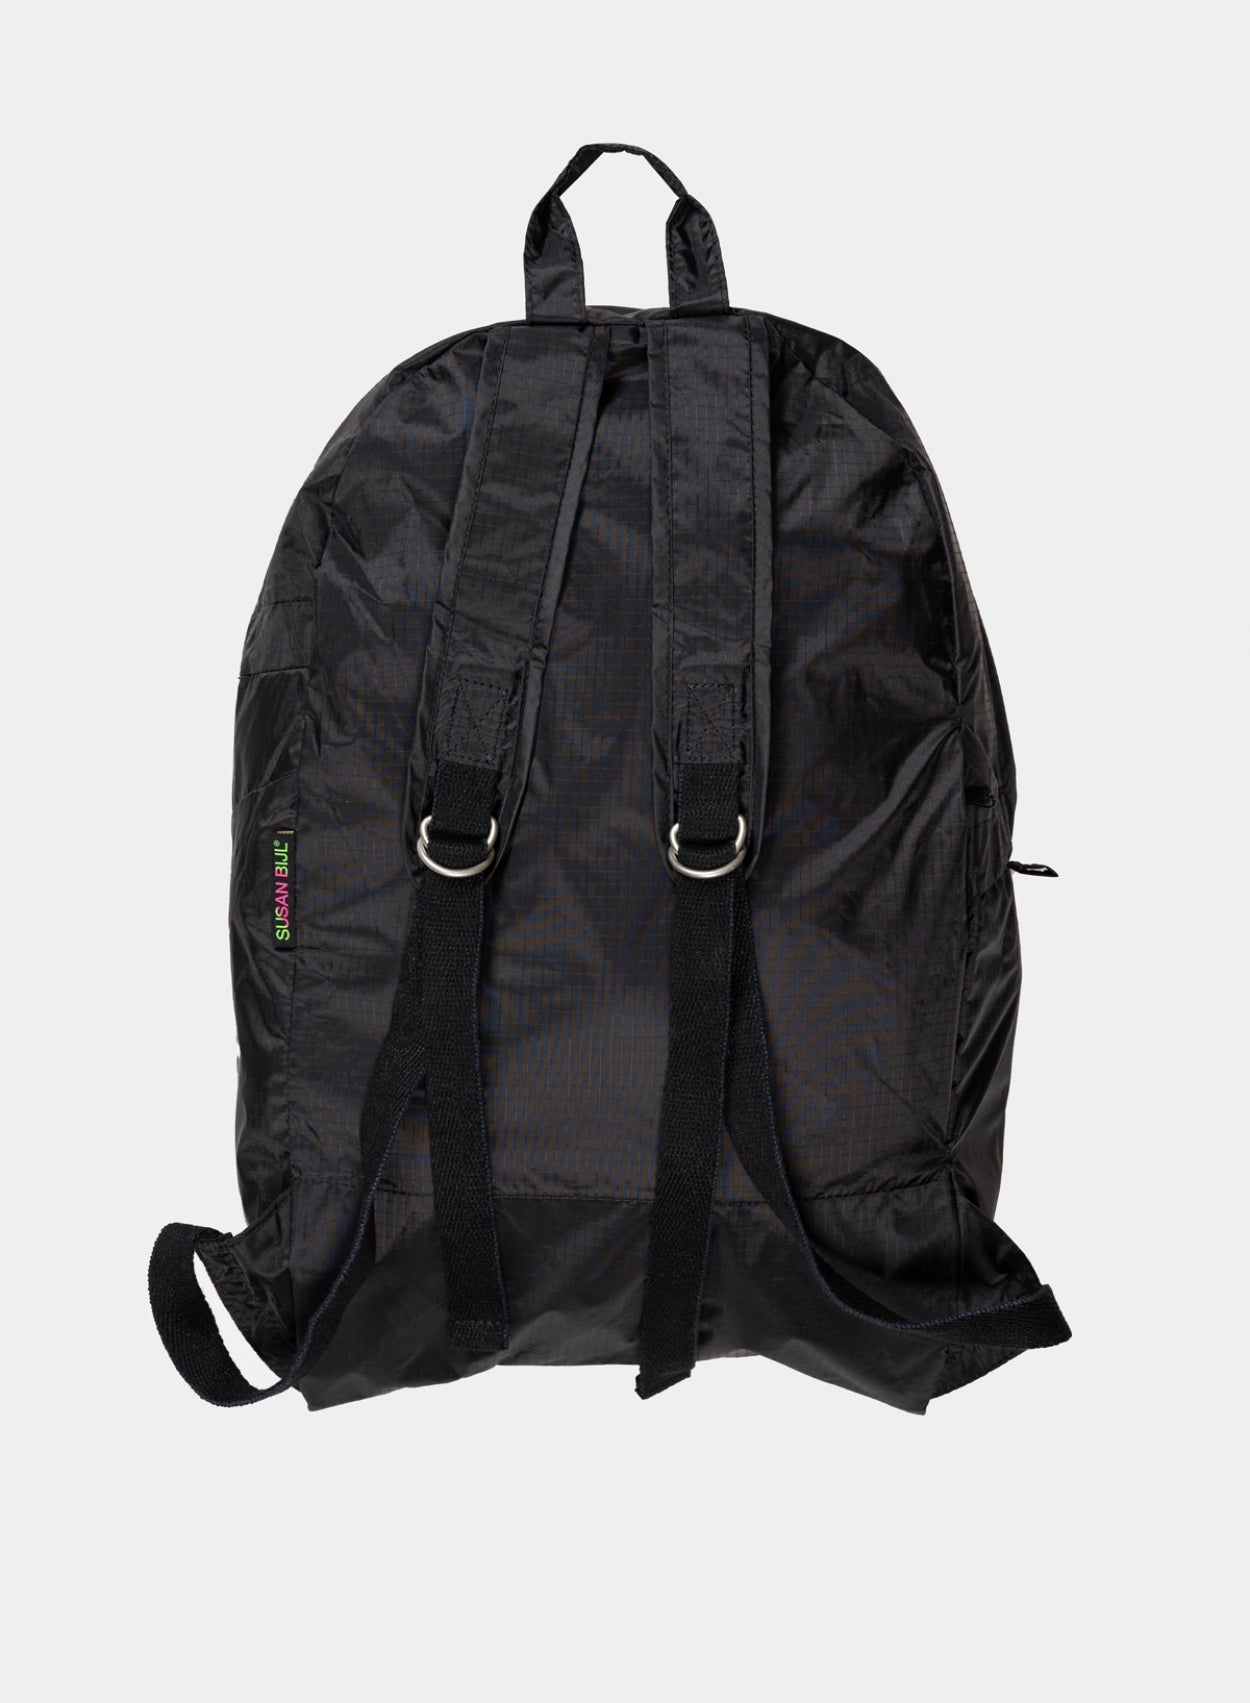 The New Foldable Backpack Black & Black Large